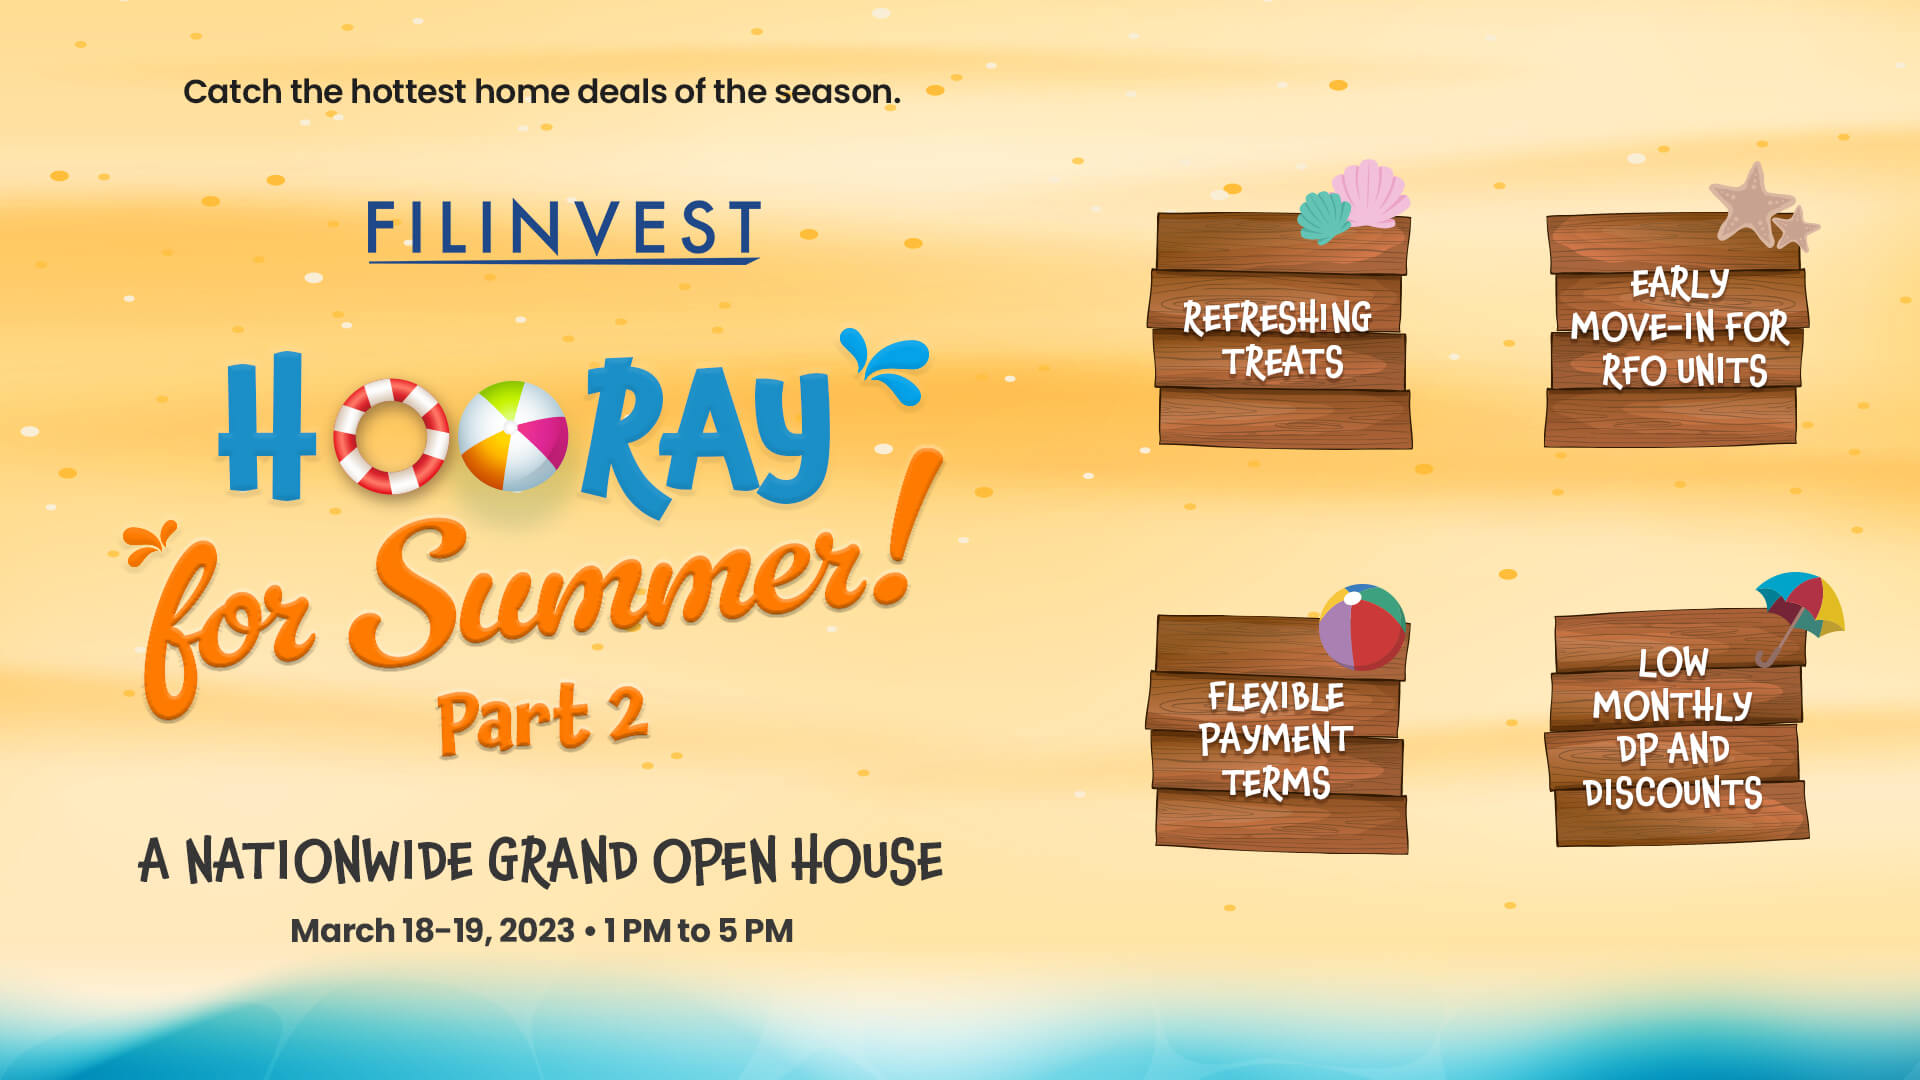 Filinvest Summer Grand Open House 2023 Part 2